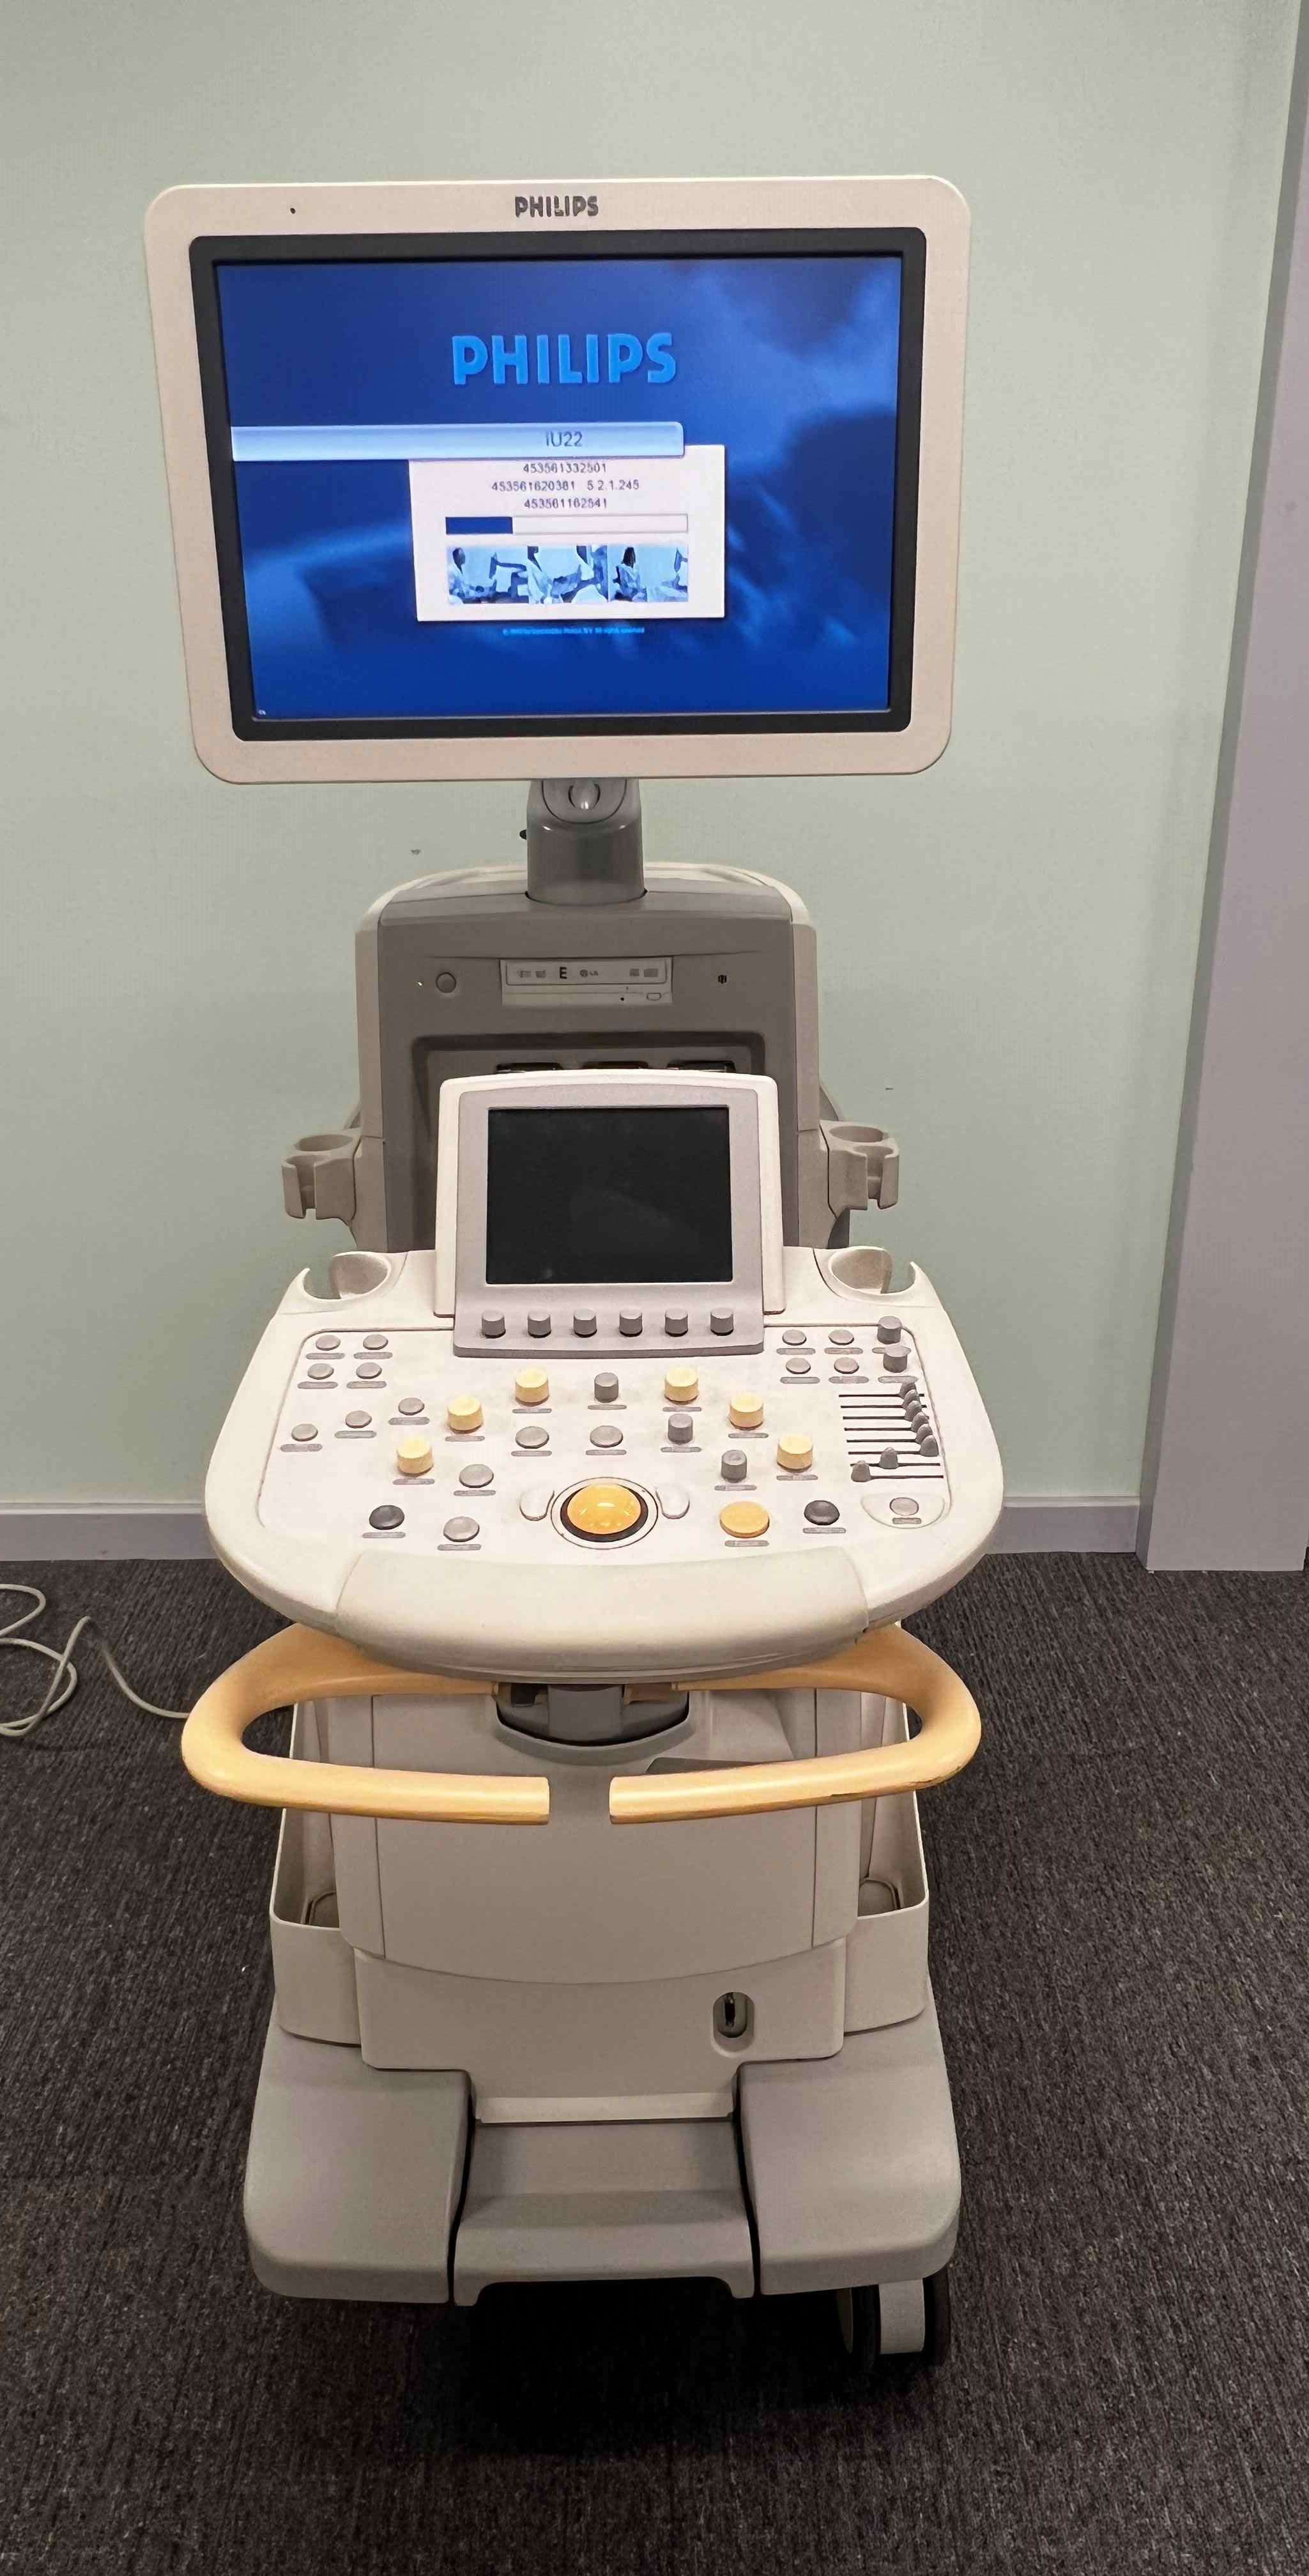 Philips IU22 Ultrasound System